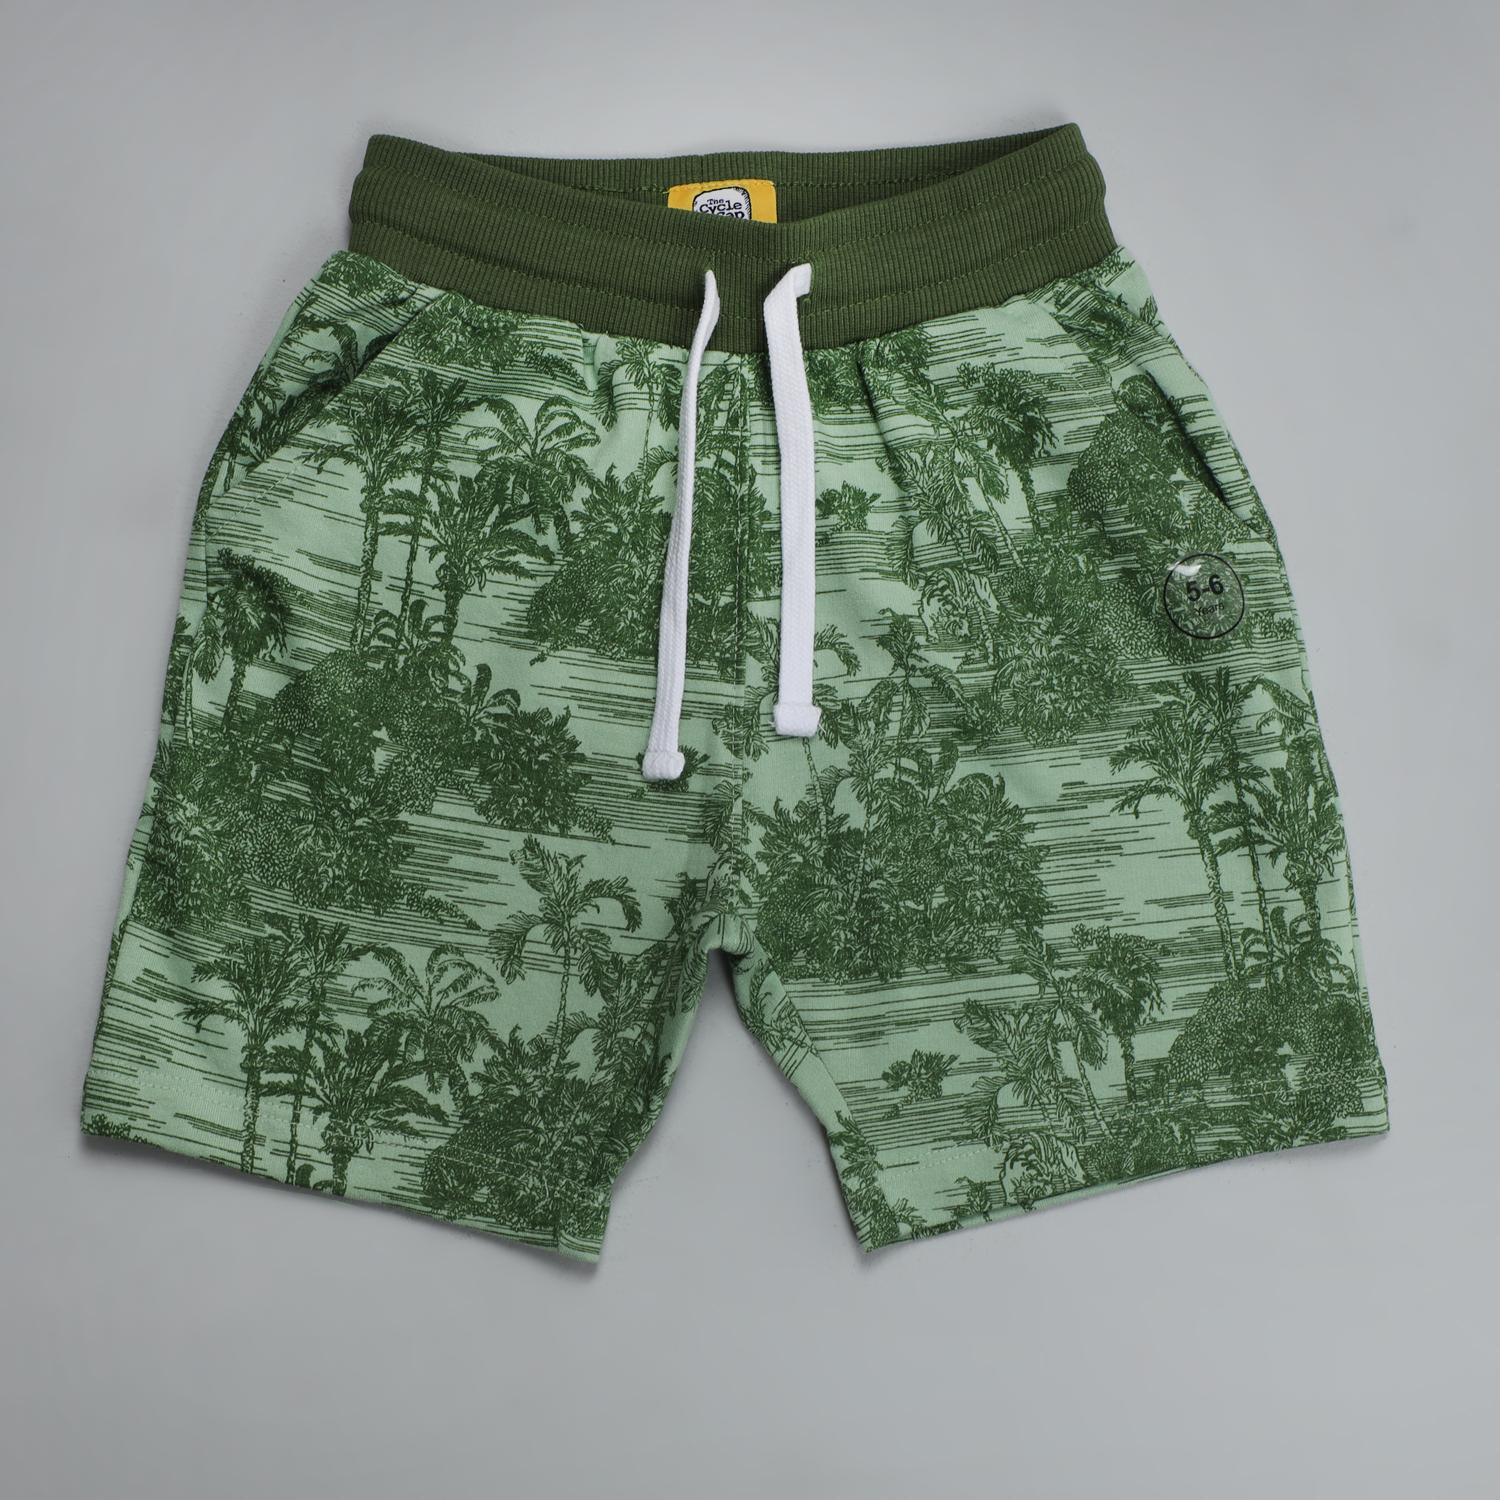 Clothing Boys Pattern Shorts-Green